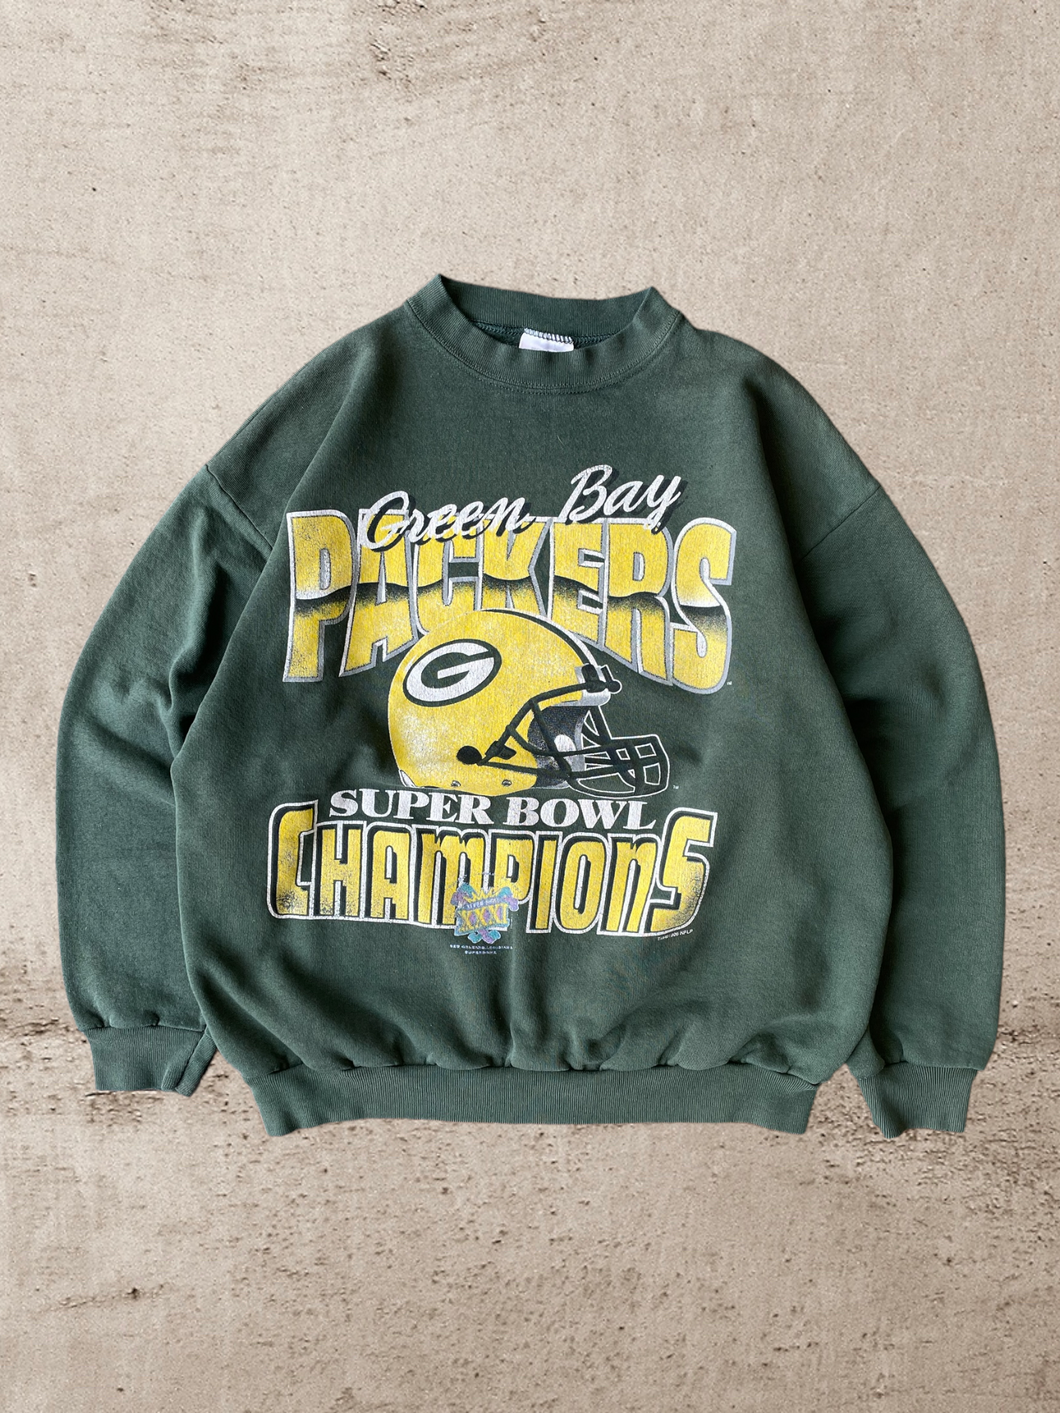 1996 Green Bay Packers Super Bowl Champions Crewneck - Large